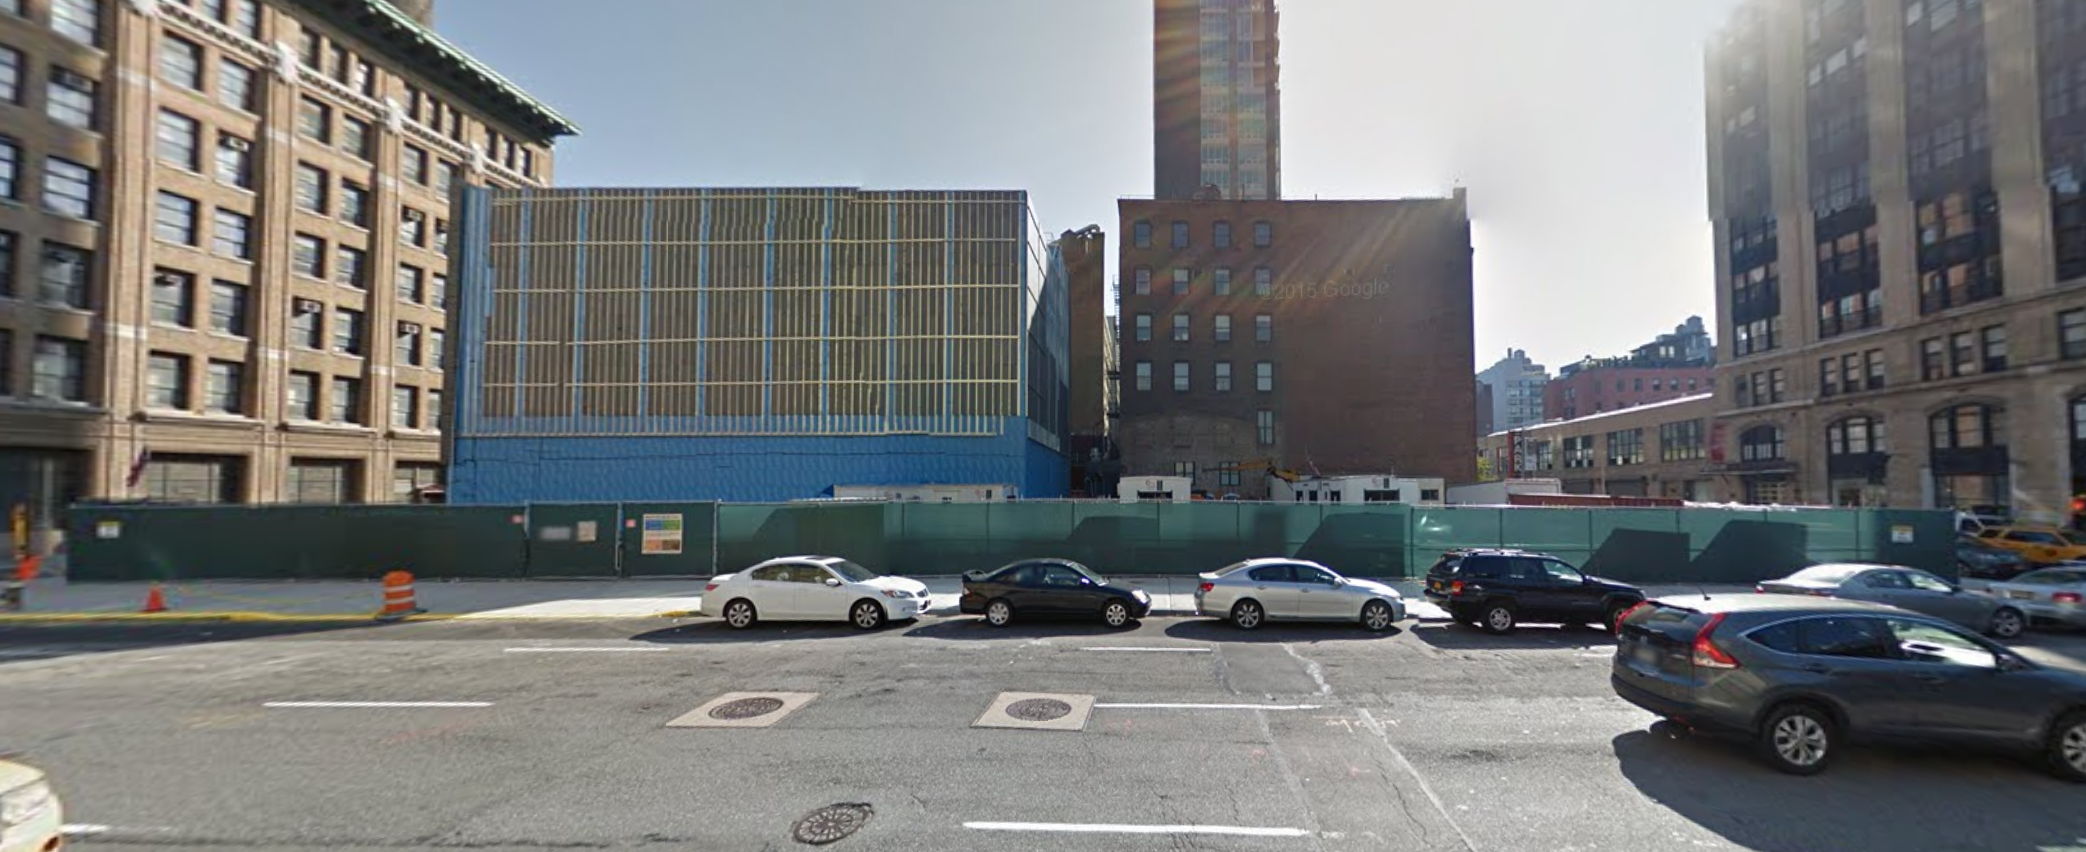 220 11th Avenue in October 2014, image via Google Maps